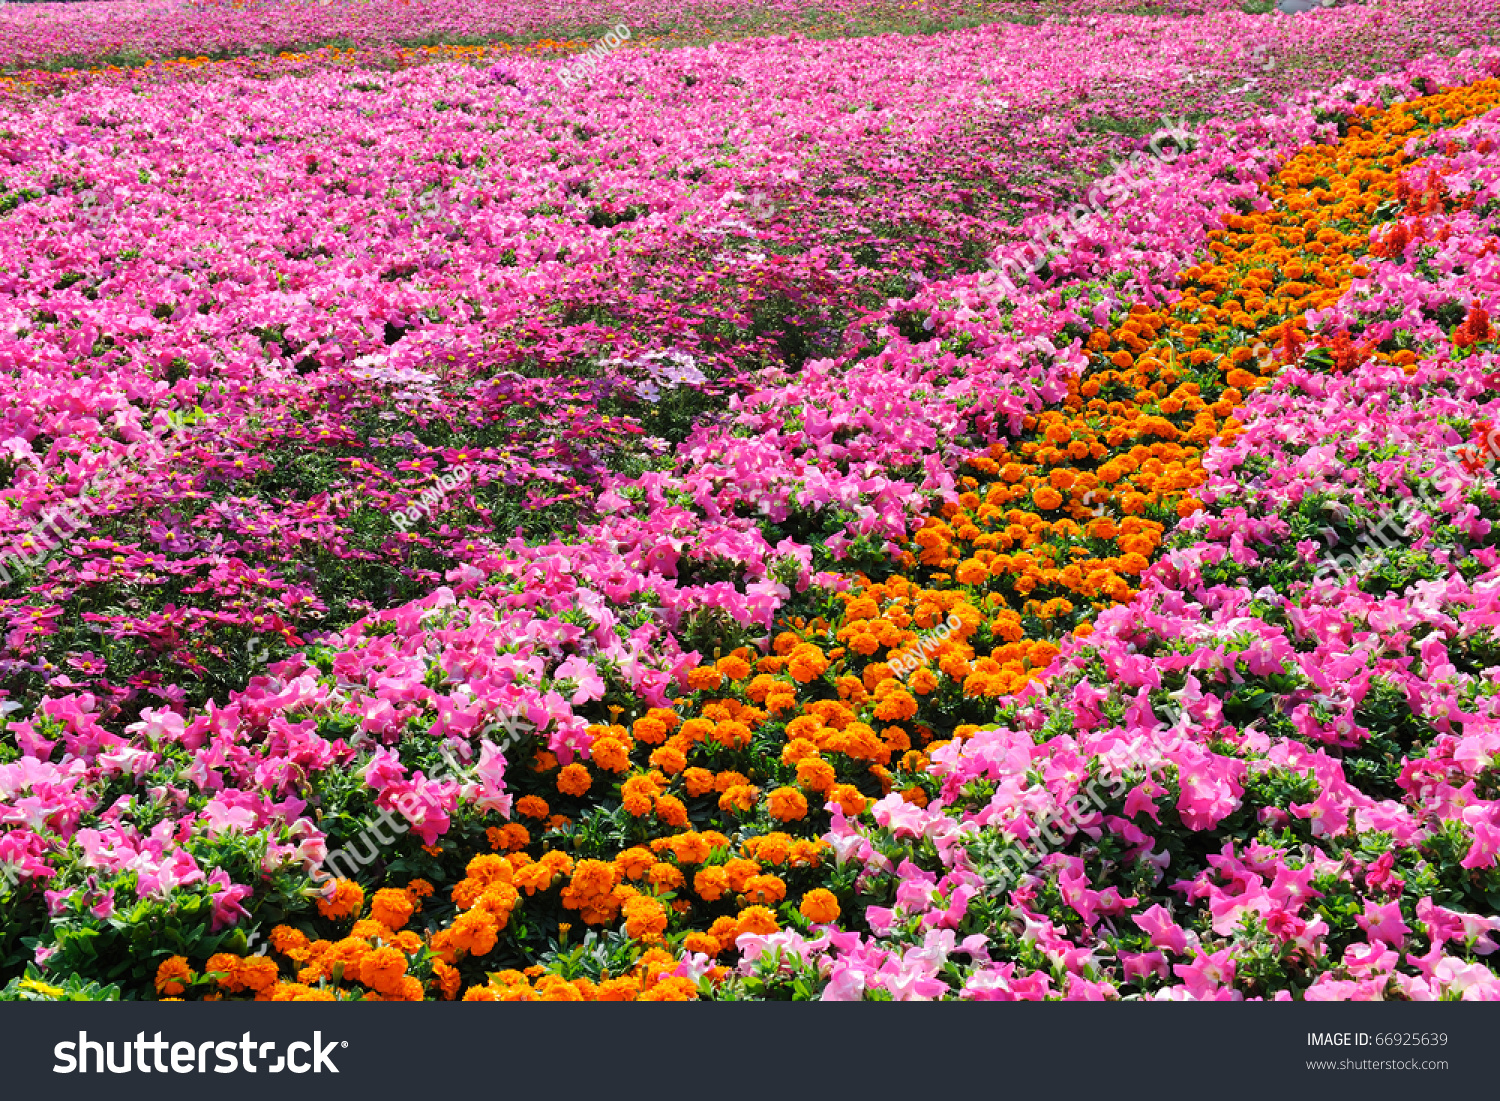 Garden Full Of Many Kinds Of Flowers Stock Photo 66925639 : Shutterstock